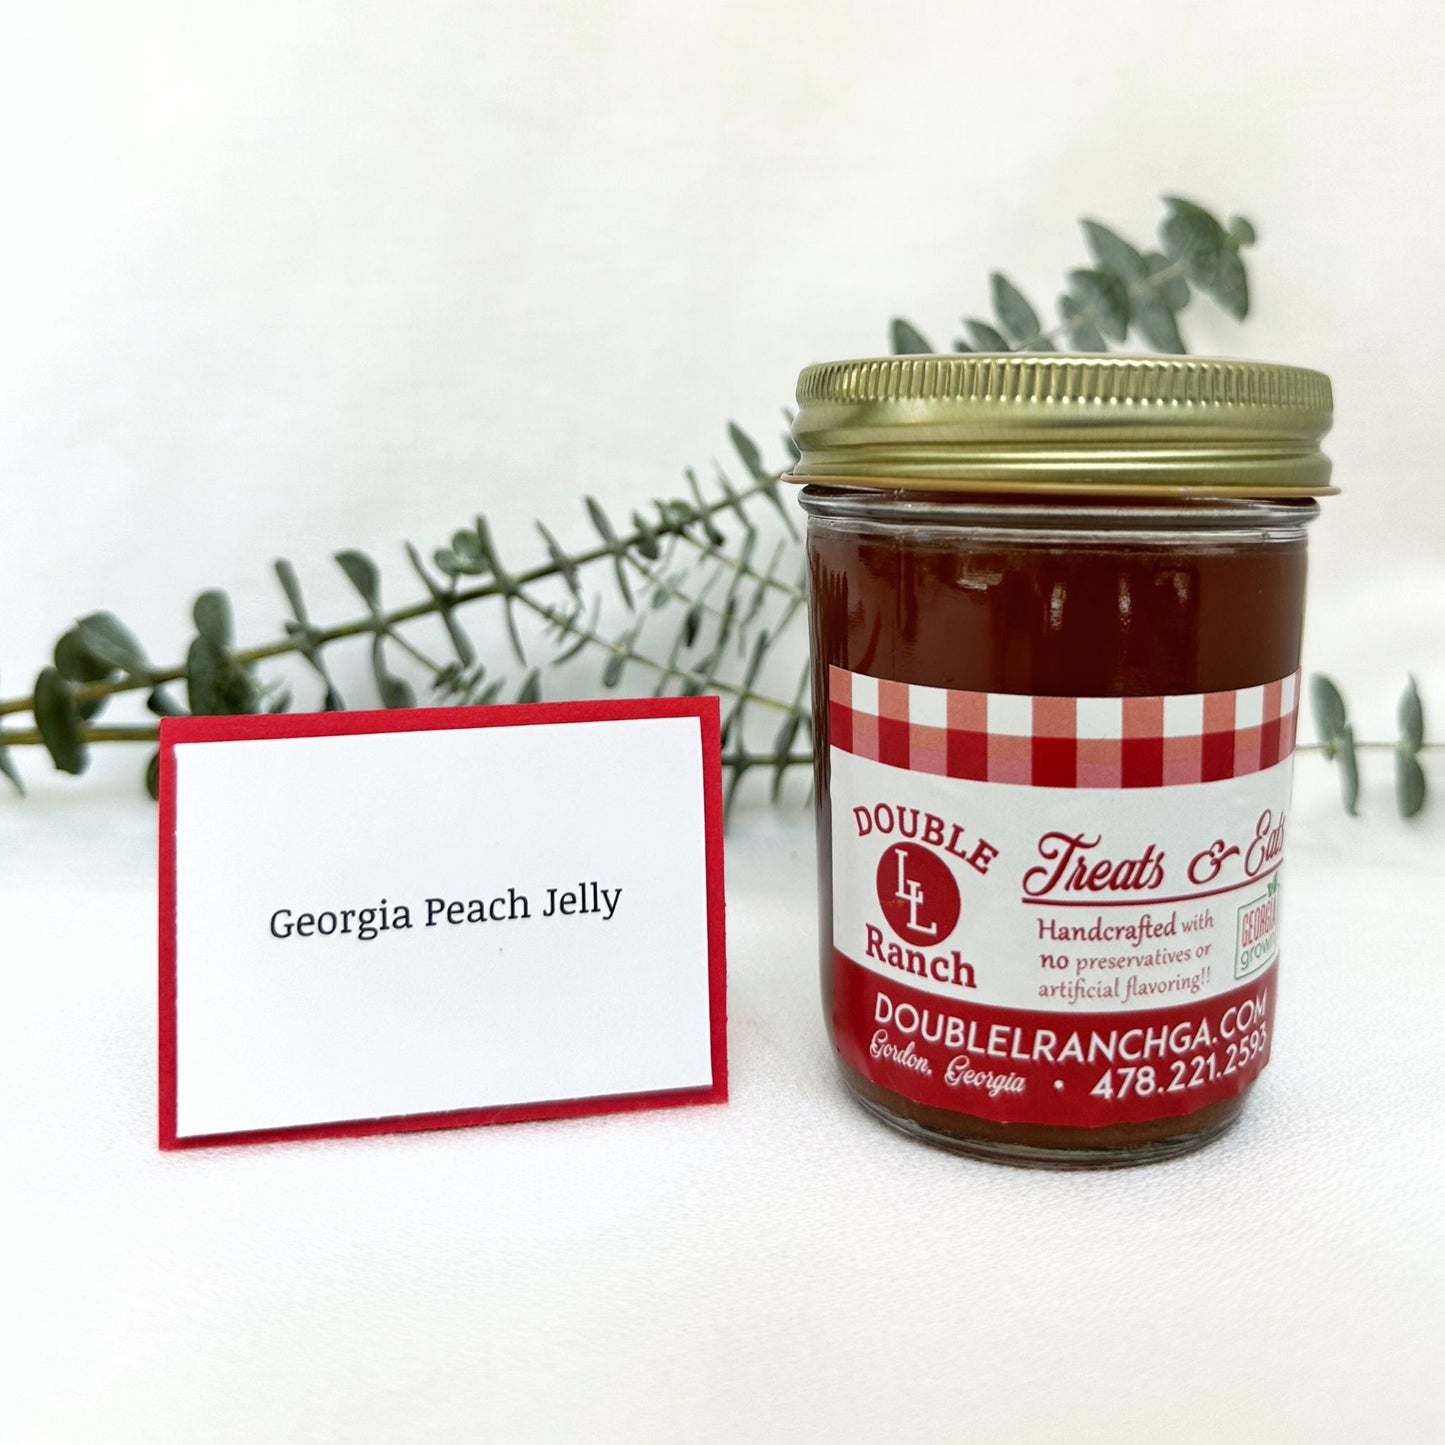 Georgia Peach Jelly